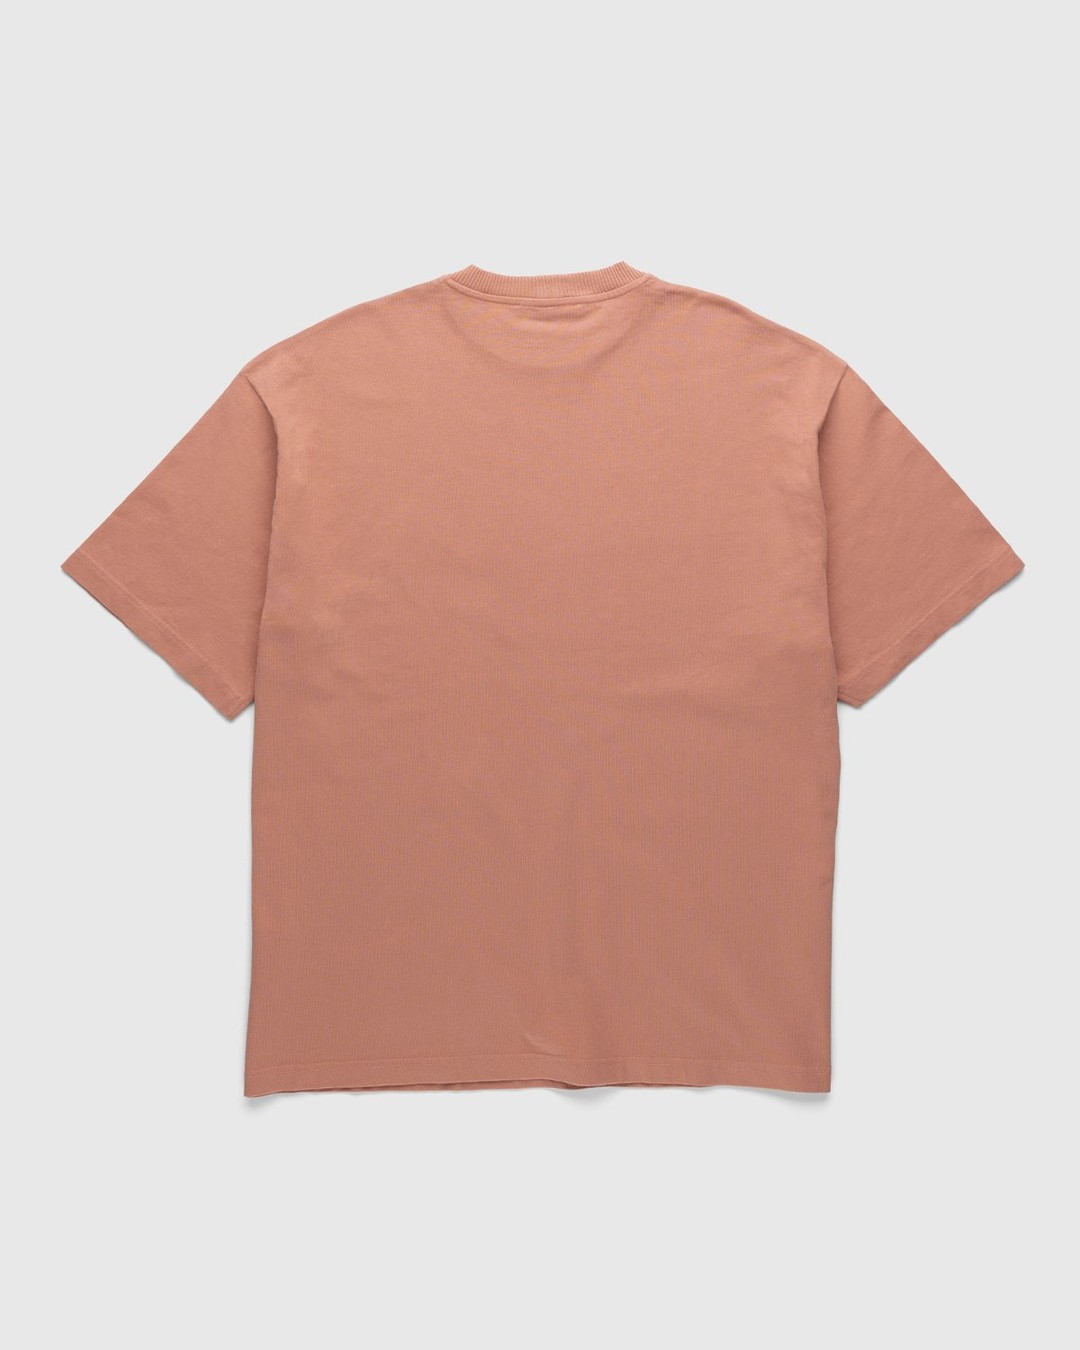 Acne Studios – Cotton Logo T-Shirt Old Pink - T-Shirts - Pink - Image 2